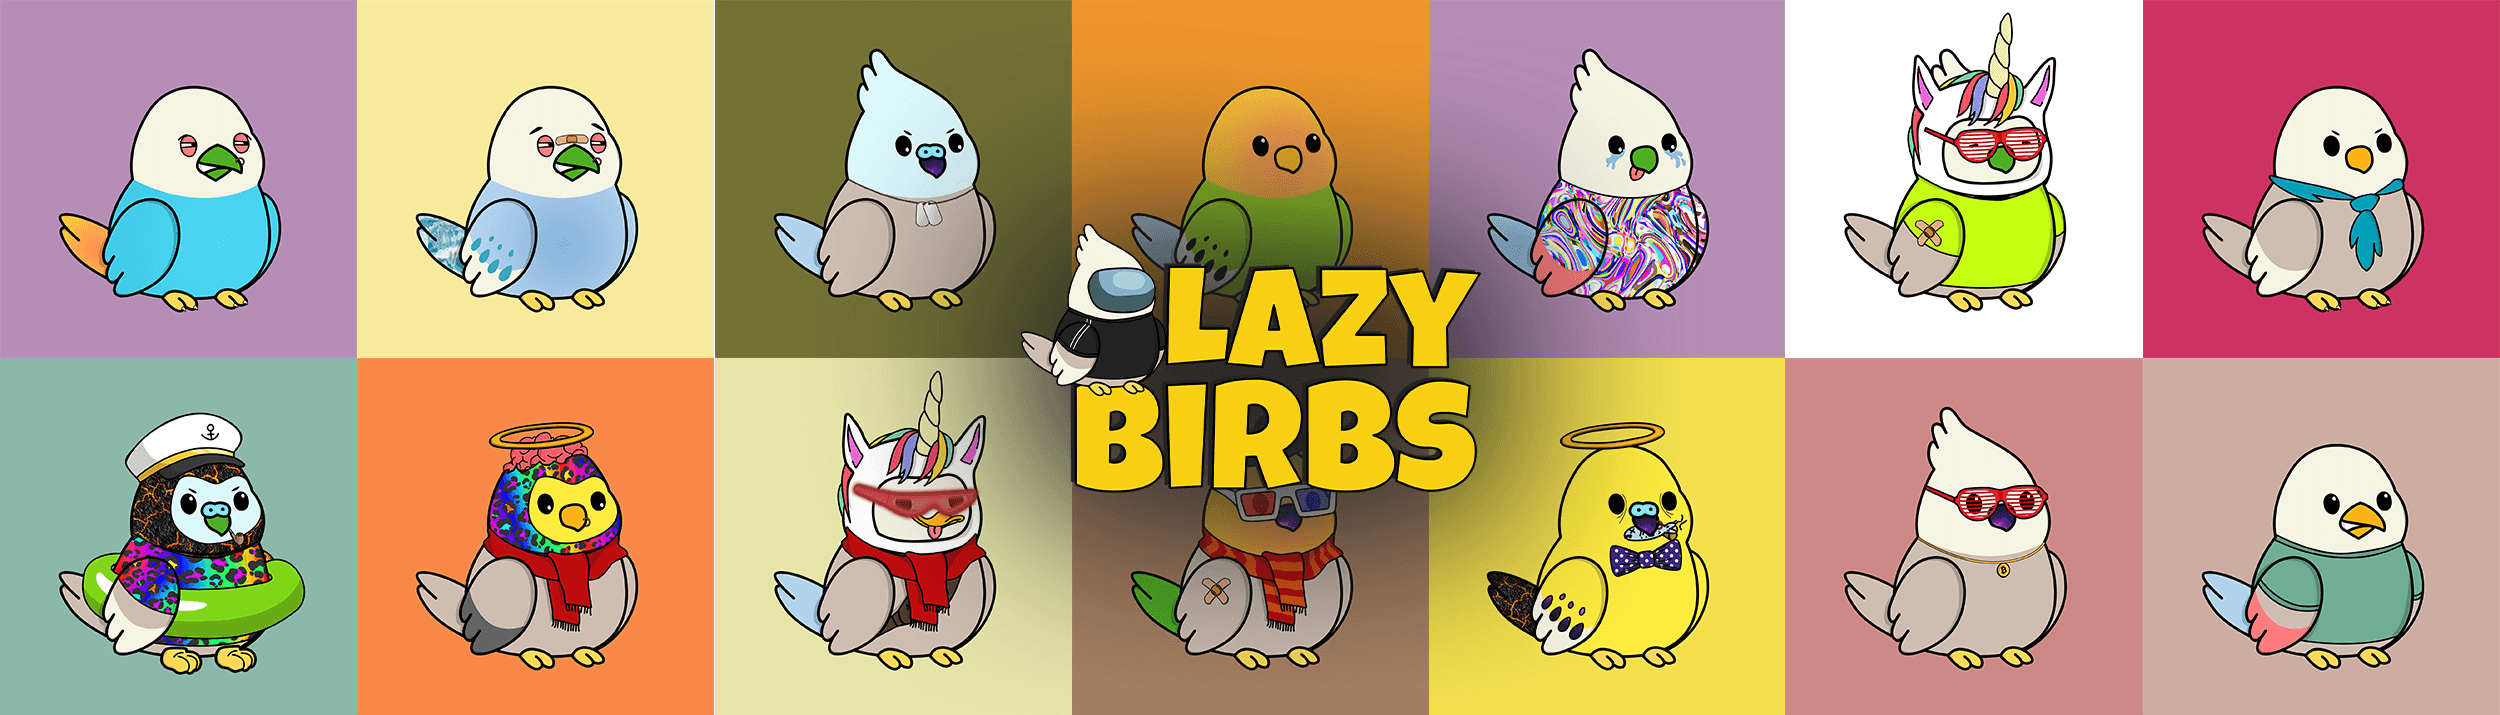 LazyBirbs